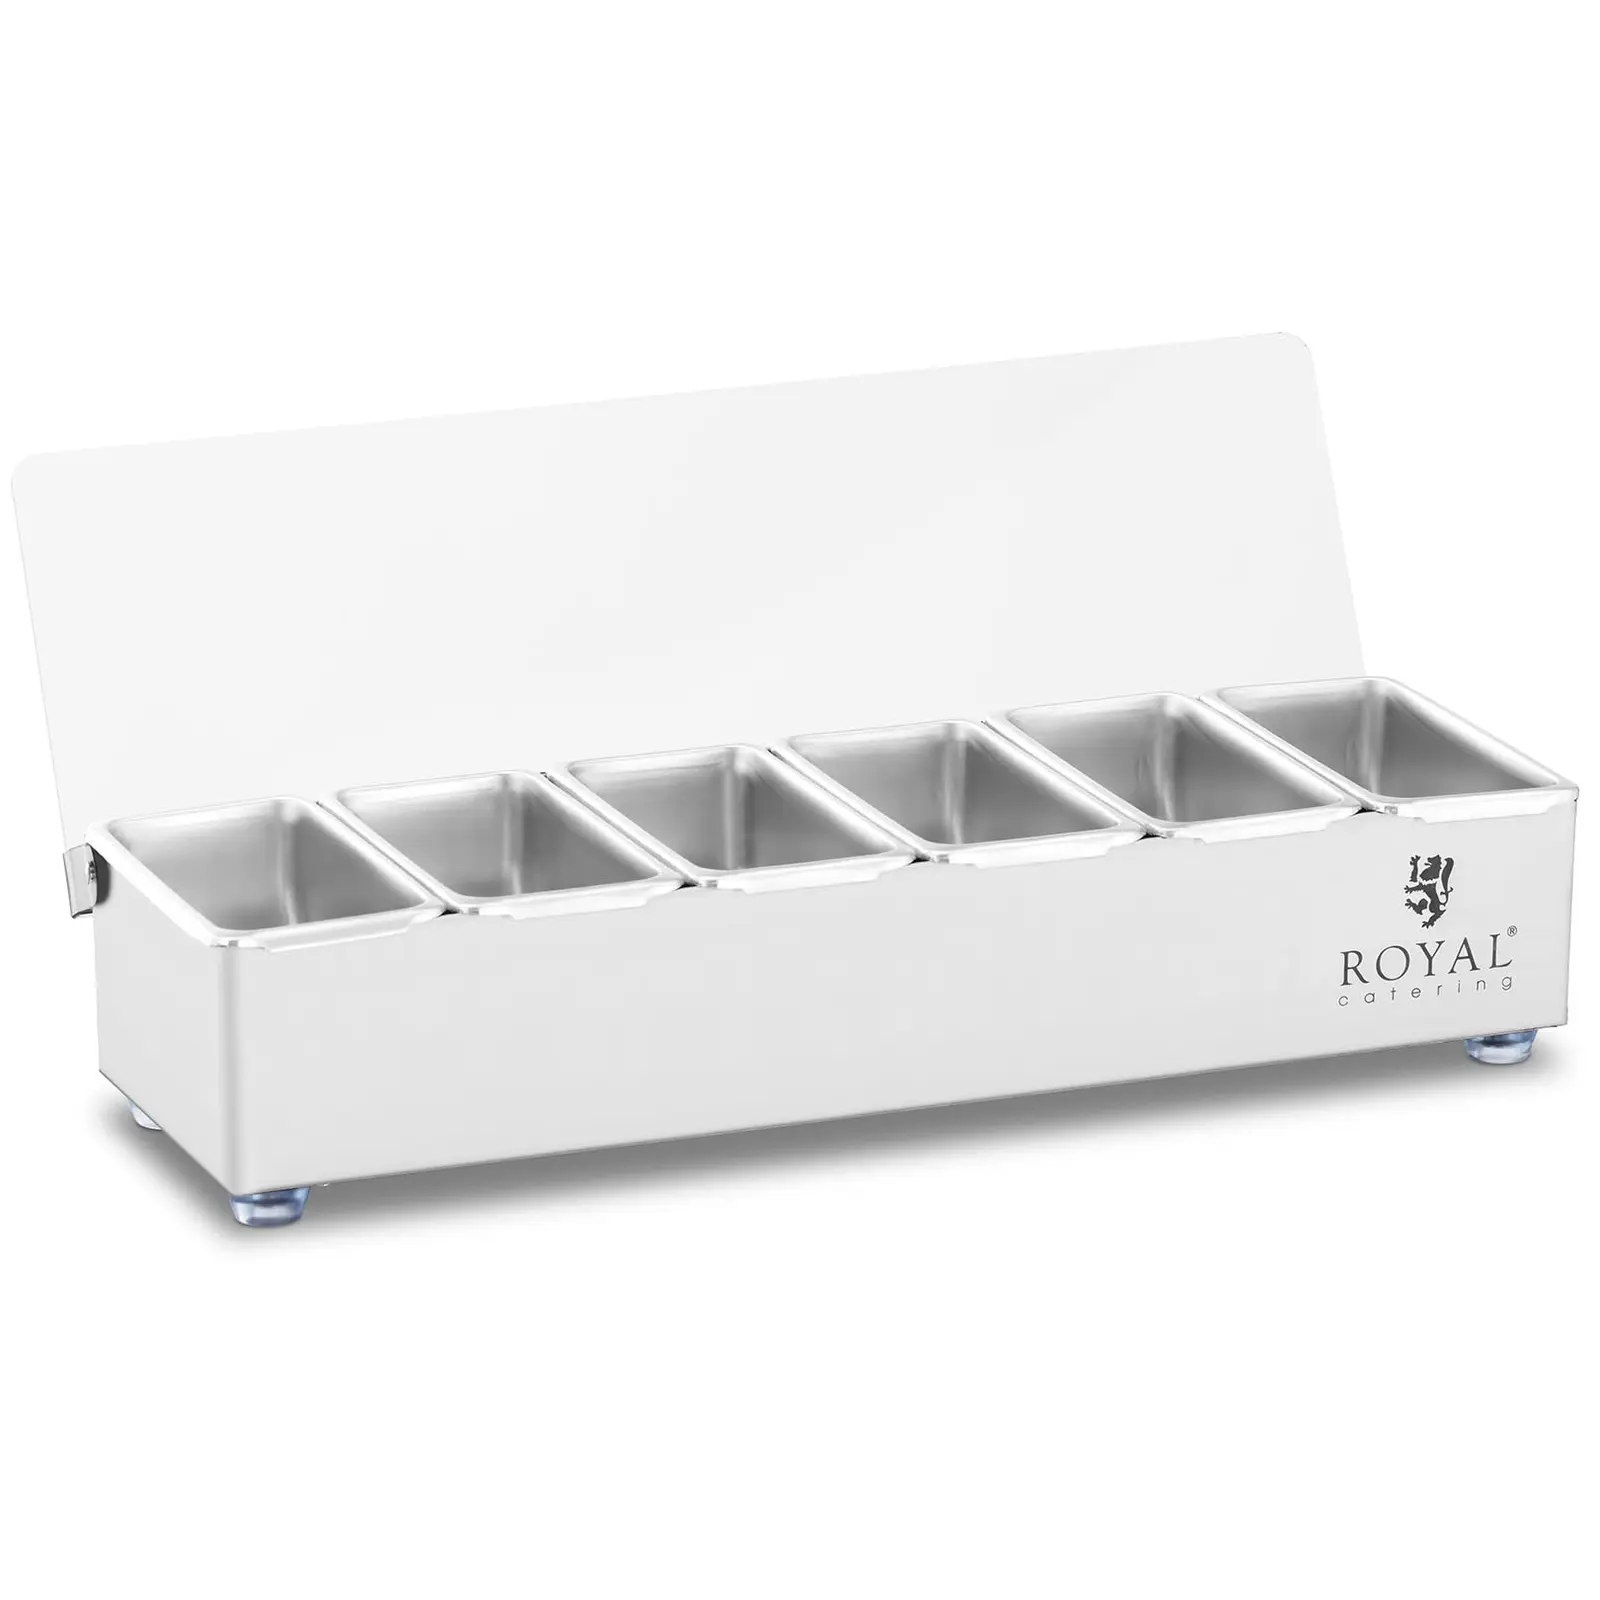 Zutatenbehälter - Edelstahl - 6 x 0,4 L - Royal Catering